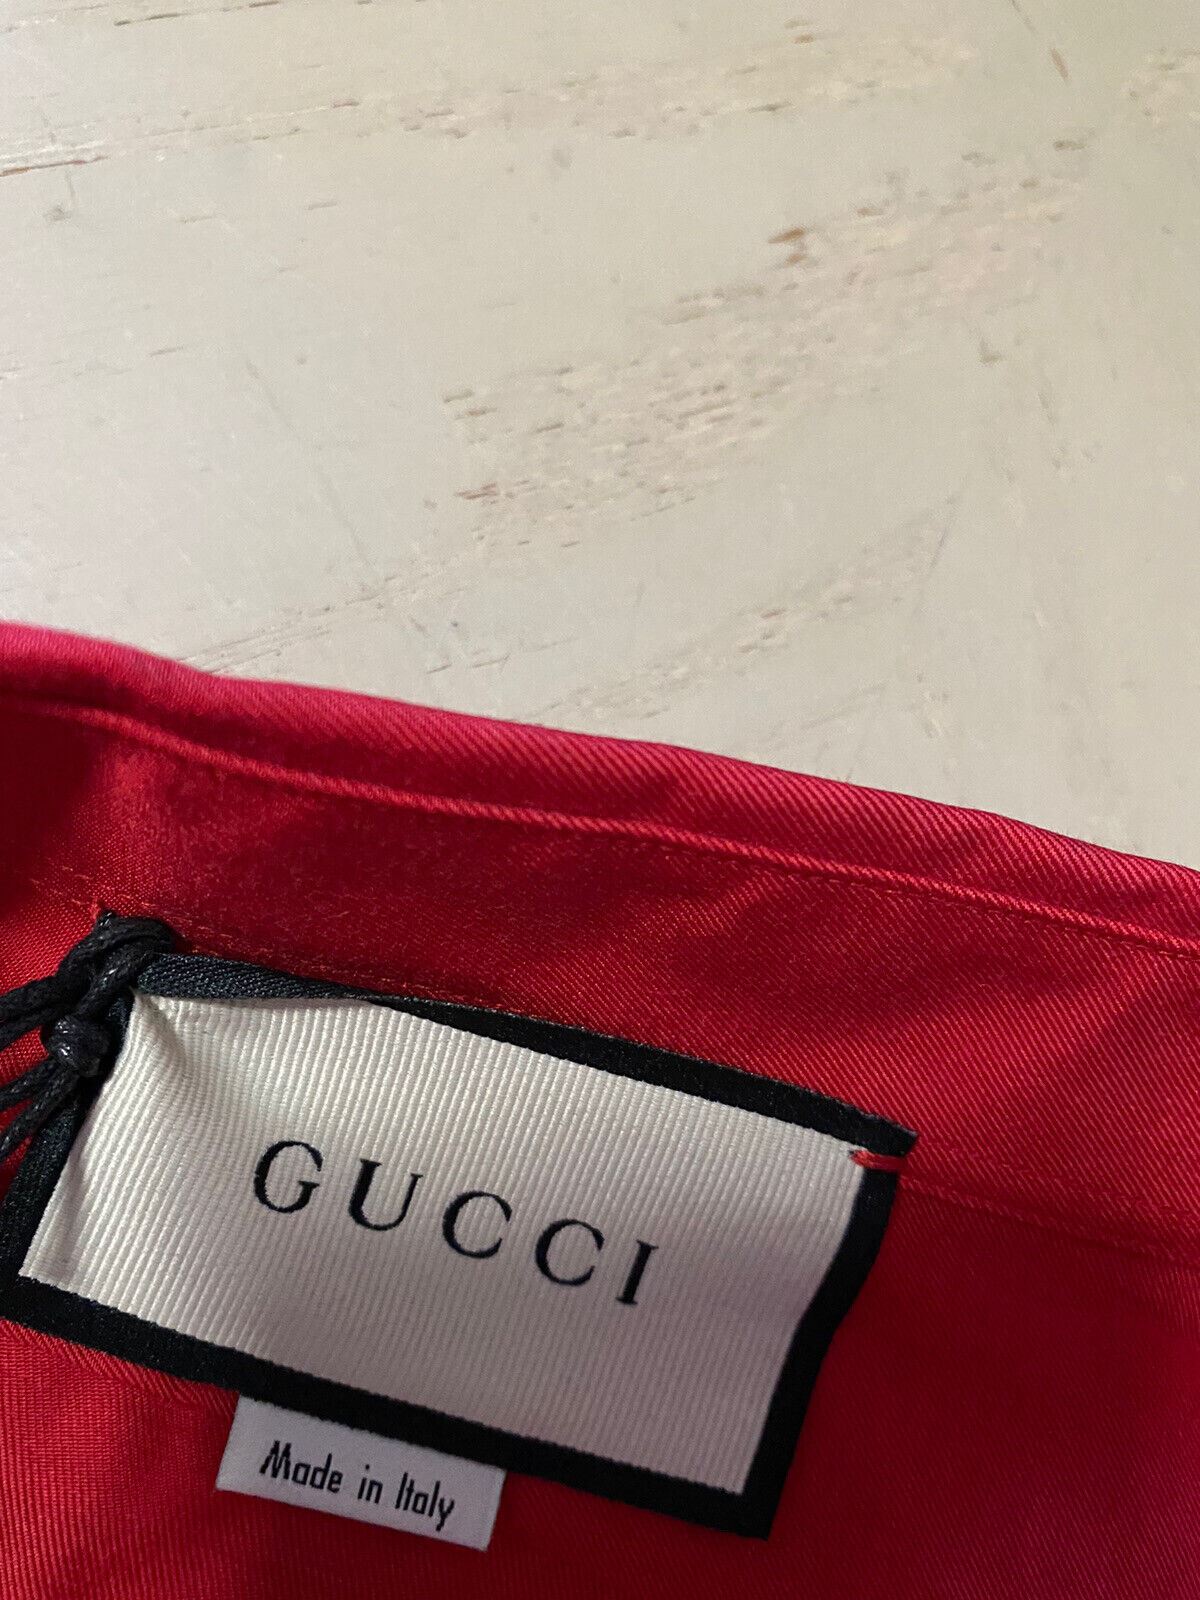 New $1200 Gucci Men’s Long Sleeve Dress Shirt DK Burgundy Size L Italy